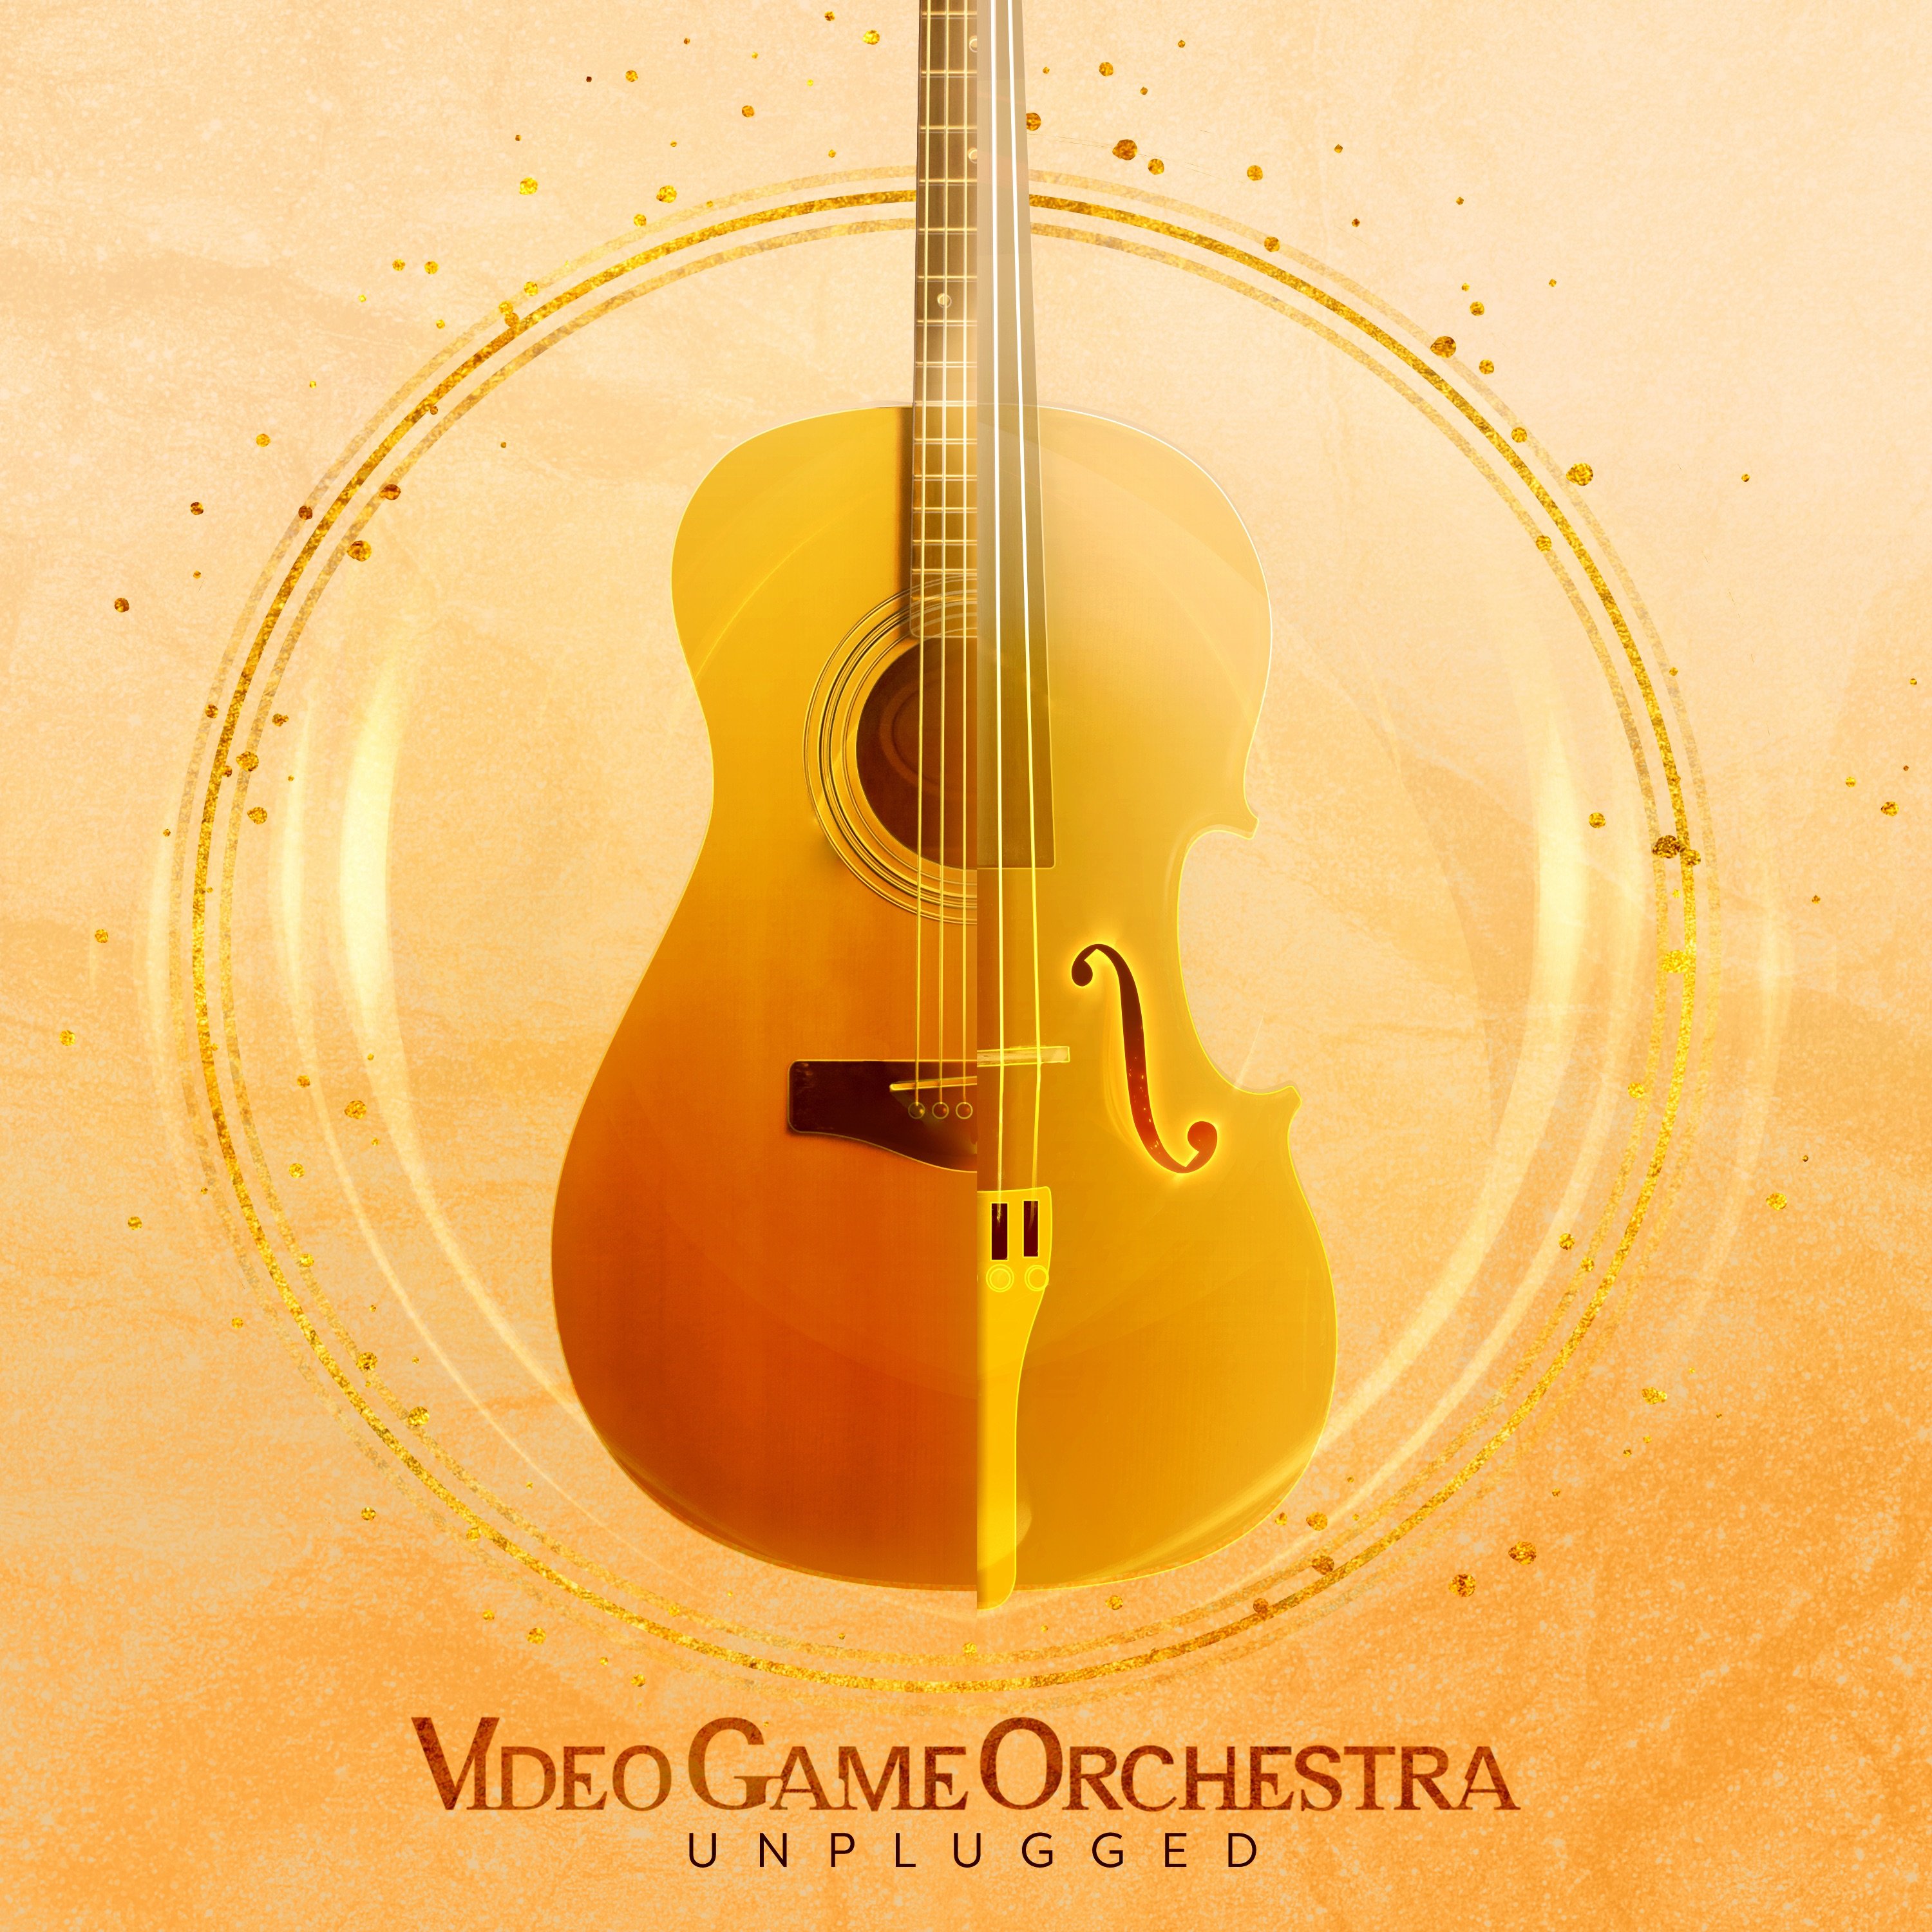 Orchestra games. Игра оркестр. Unplugged 2 обложка.